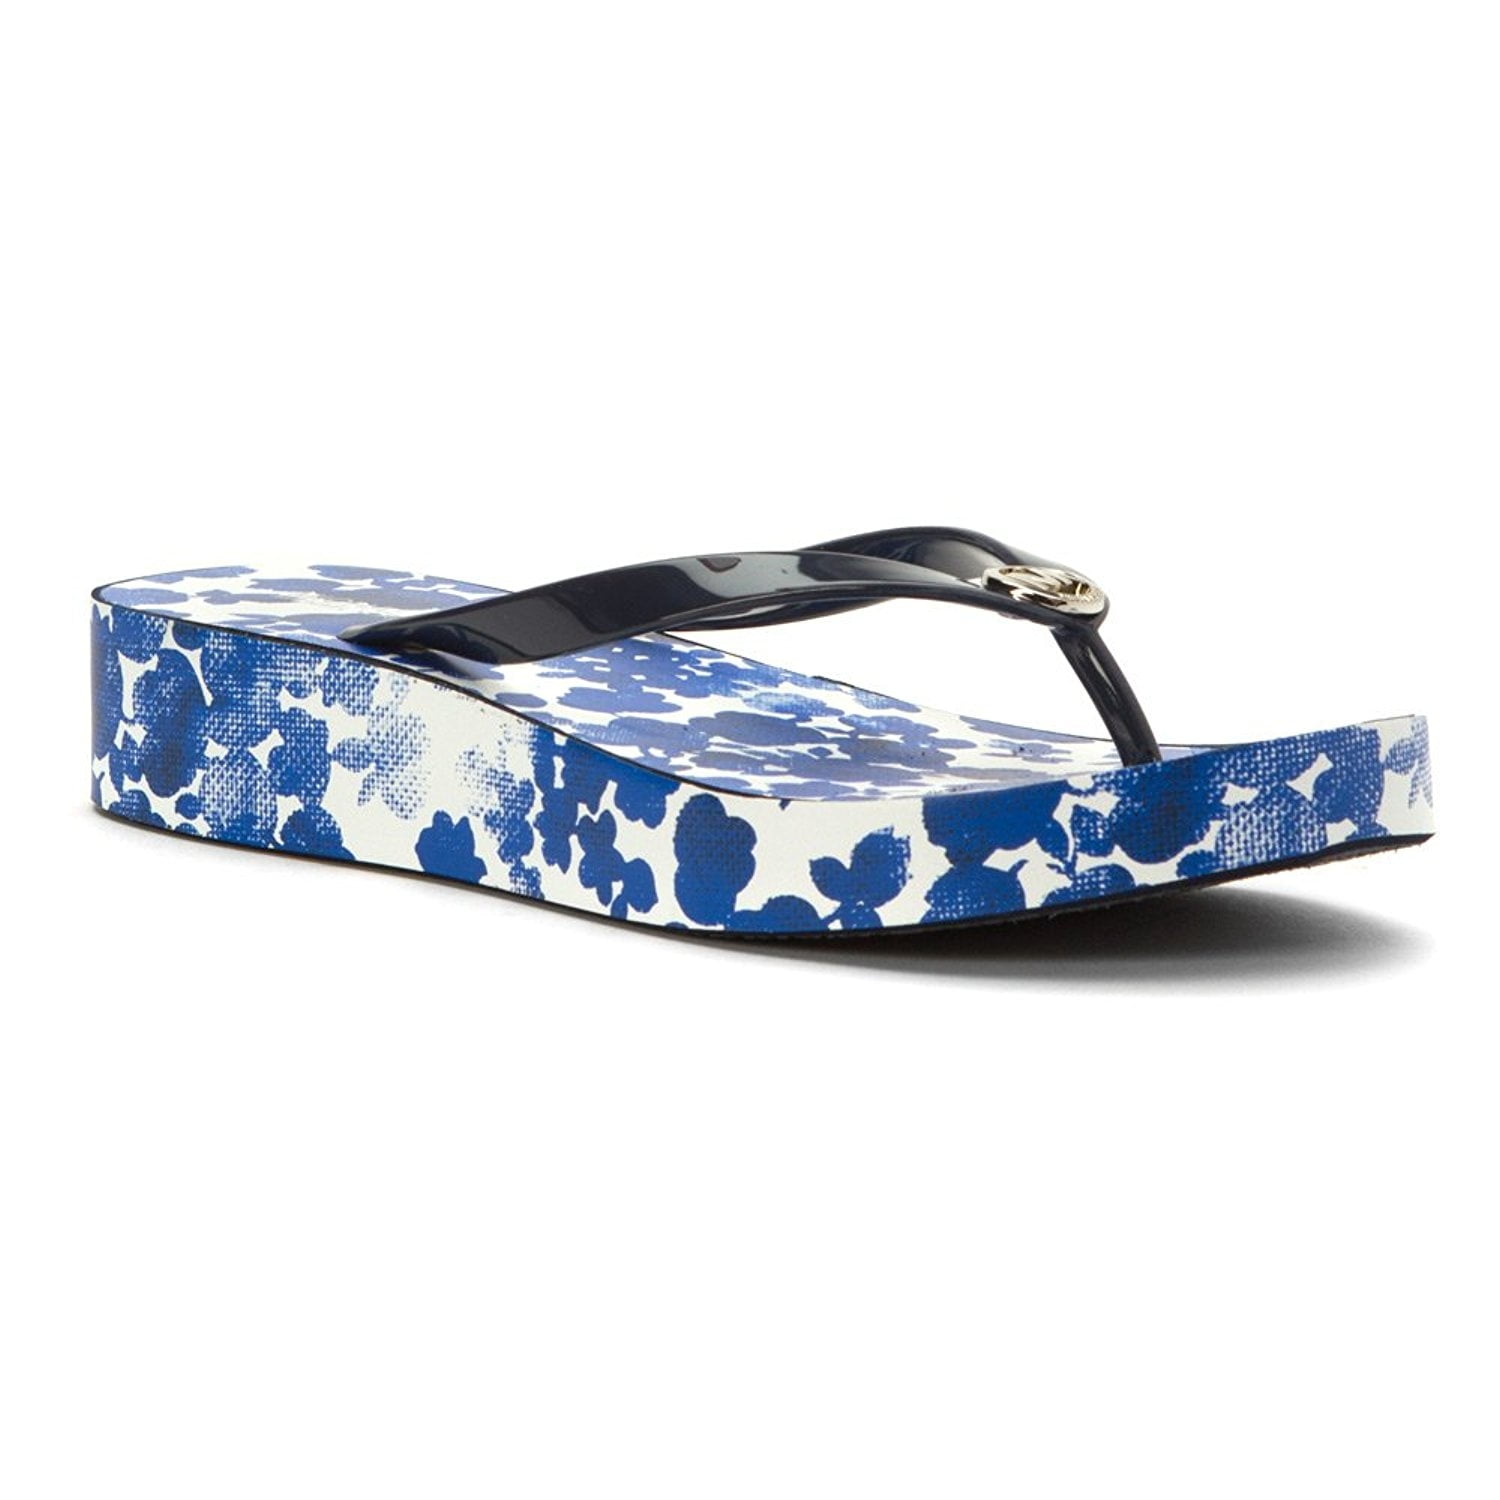 michael kors navy blue flip flops